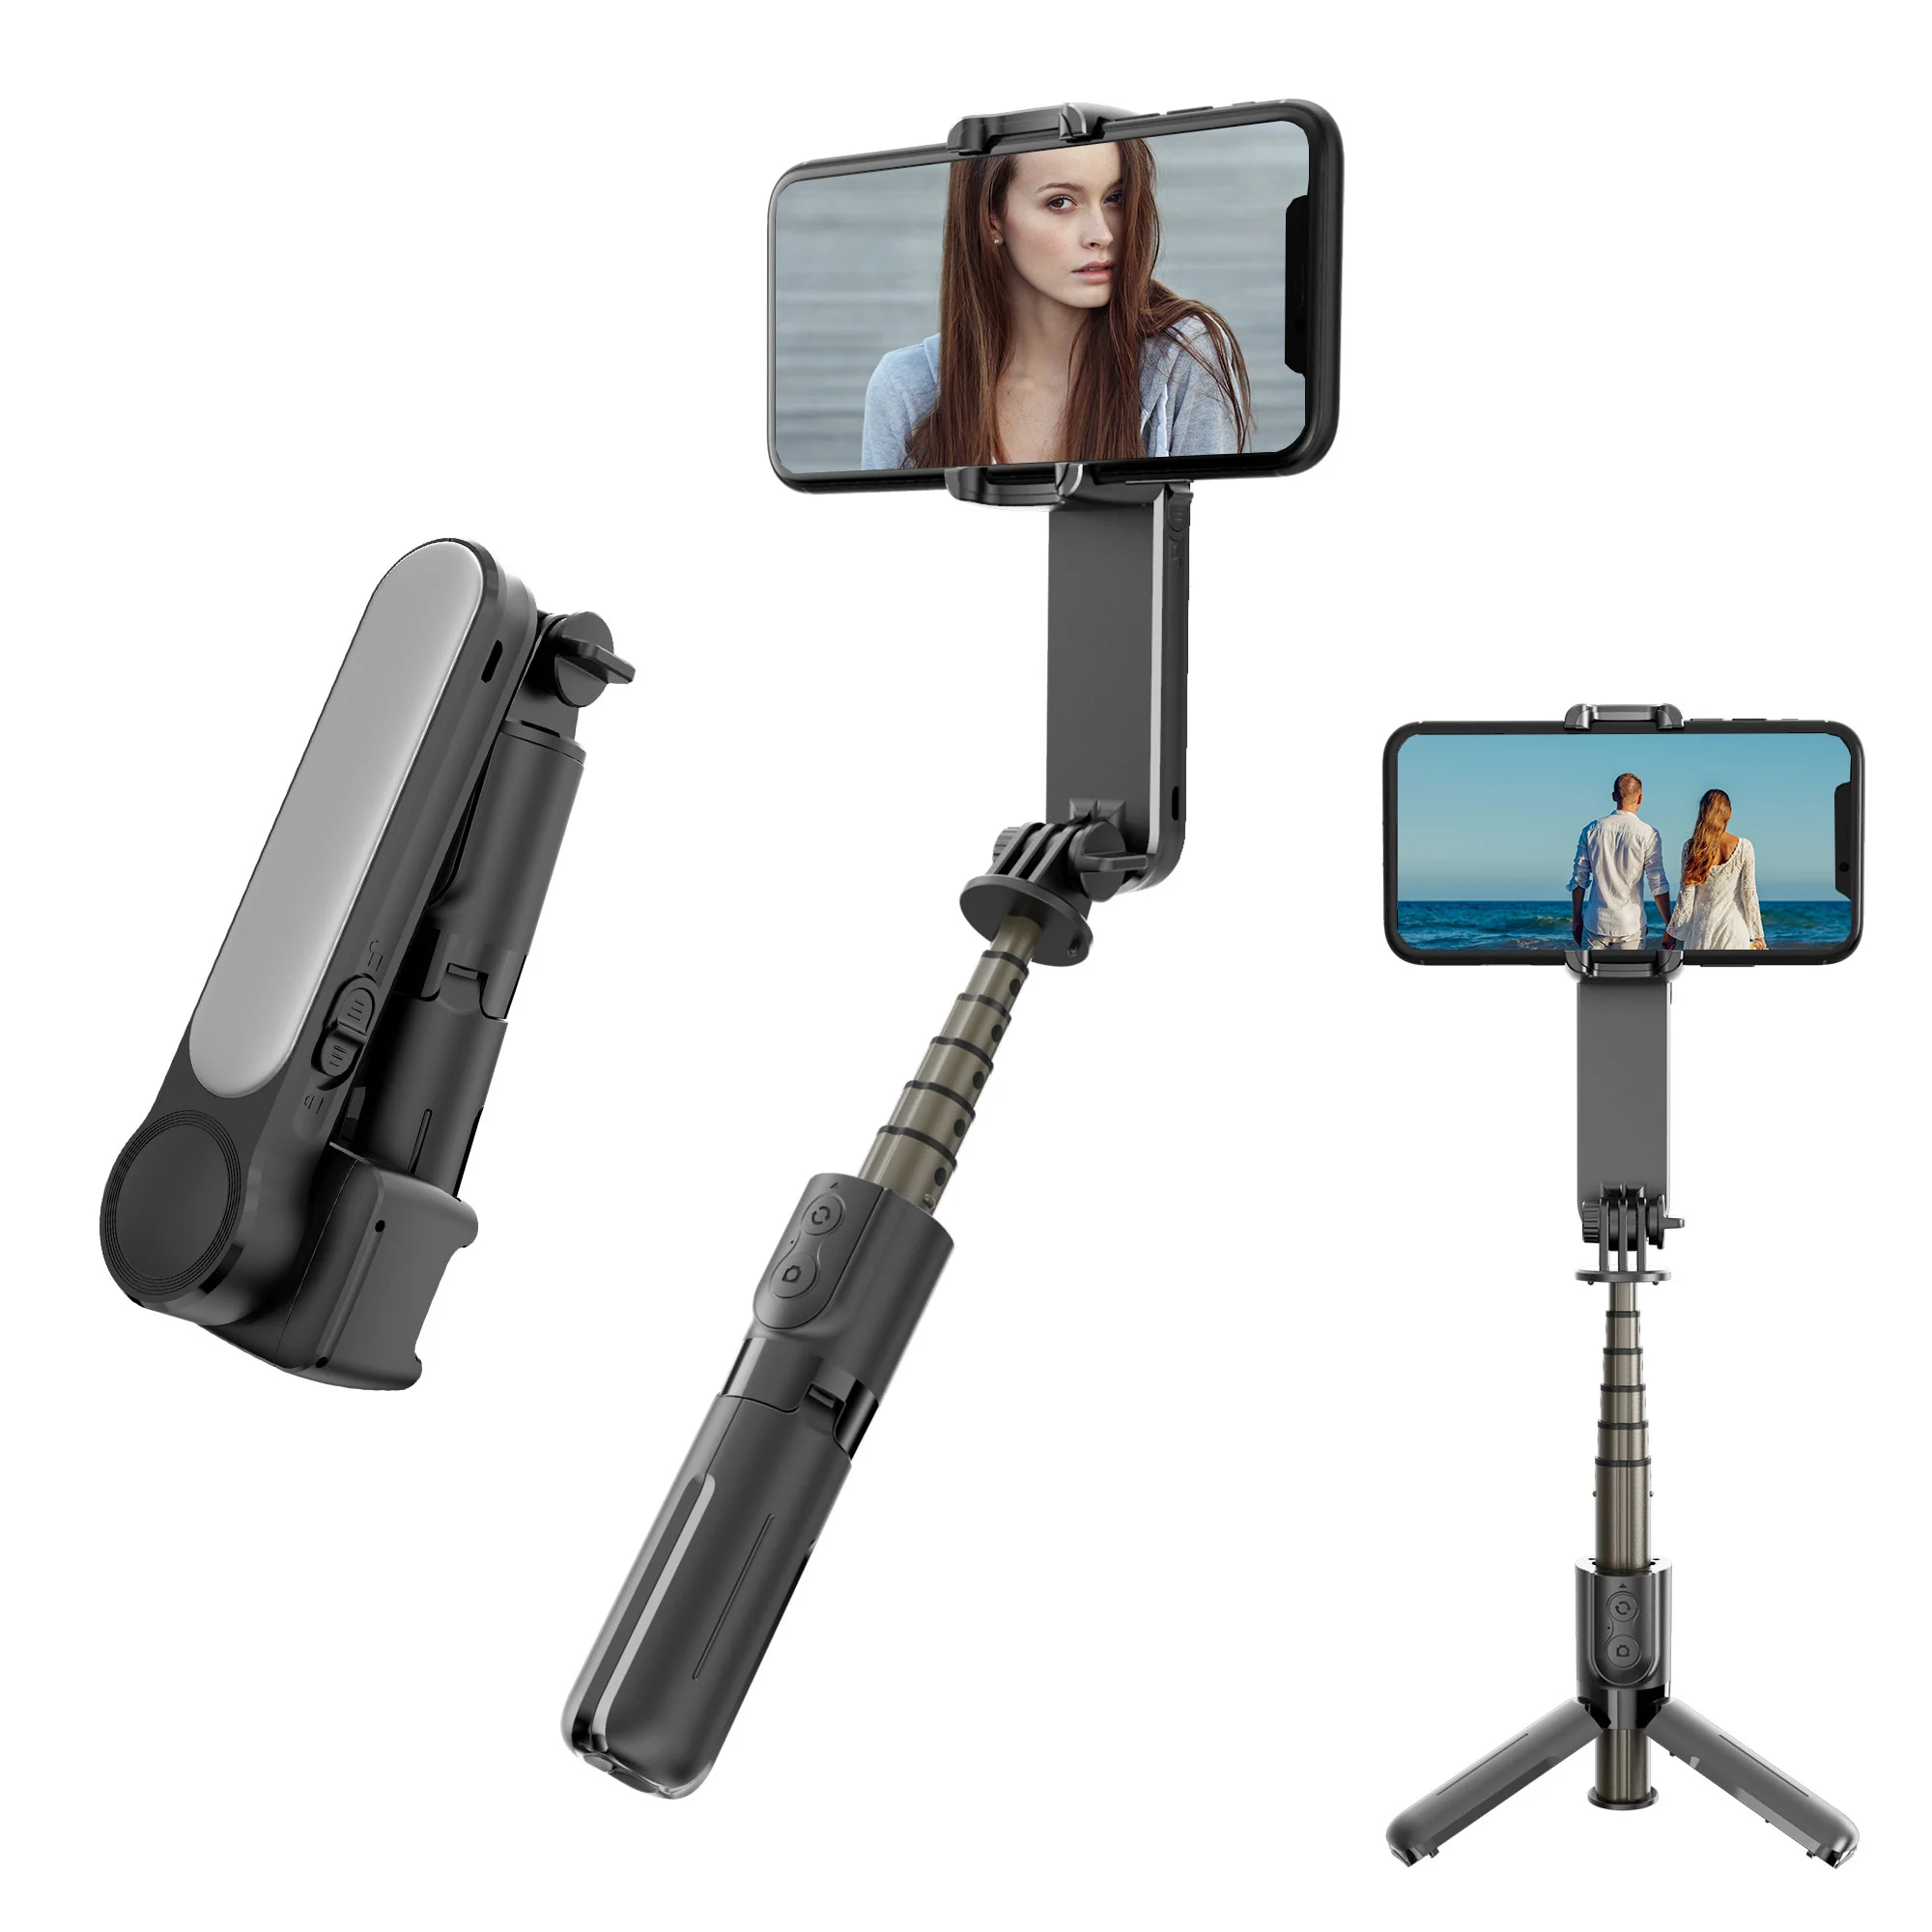 

Folding with LED fill light handheld 360 Degree Rotation Wireless tripod vlog selfie stick smart gimbal Stabilizer